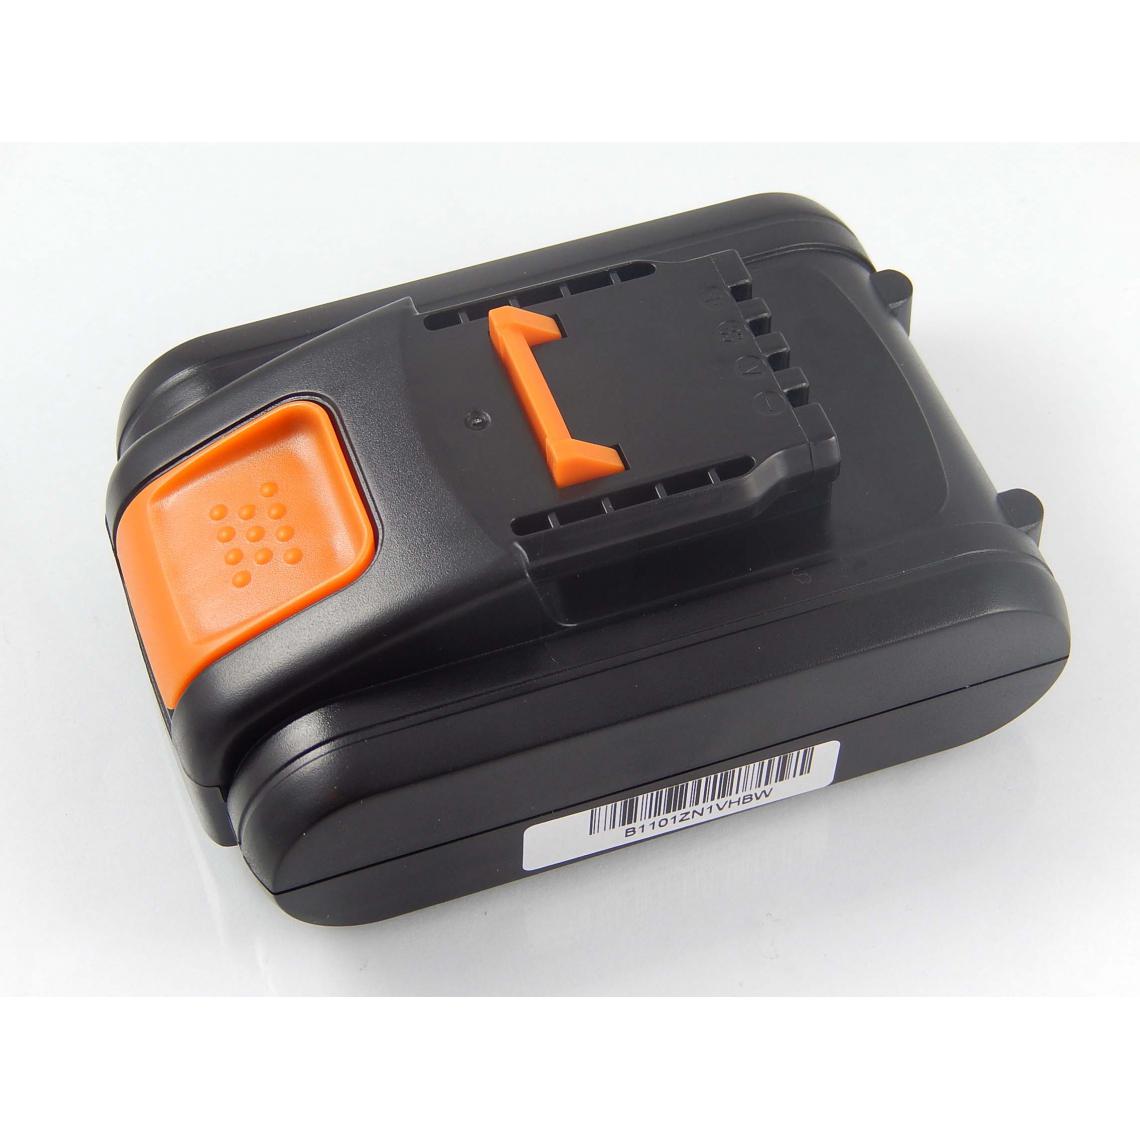 Vhbw - vhbw Batterie compatible avec Worx WG163E.2, WG163E.9, WG165, WG166, WG166.1, WG169, WG169E outil électrique (2000mAh Li-ion 20 V) - Clouterie